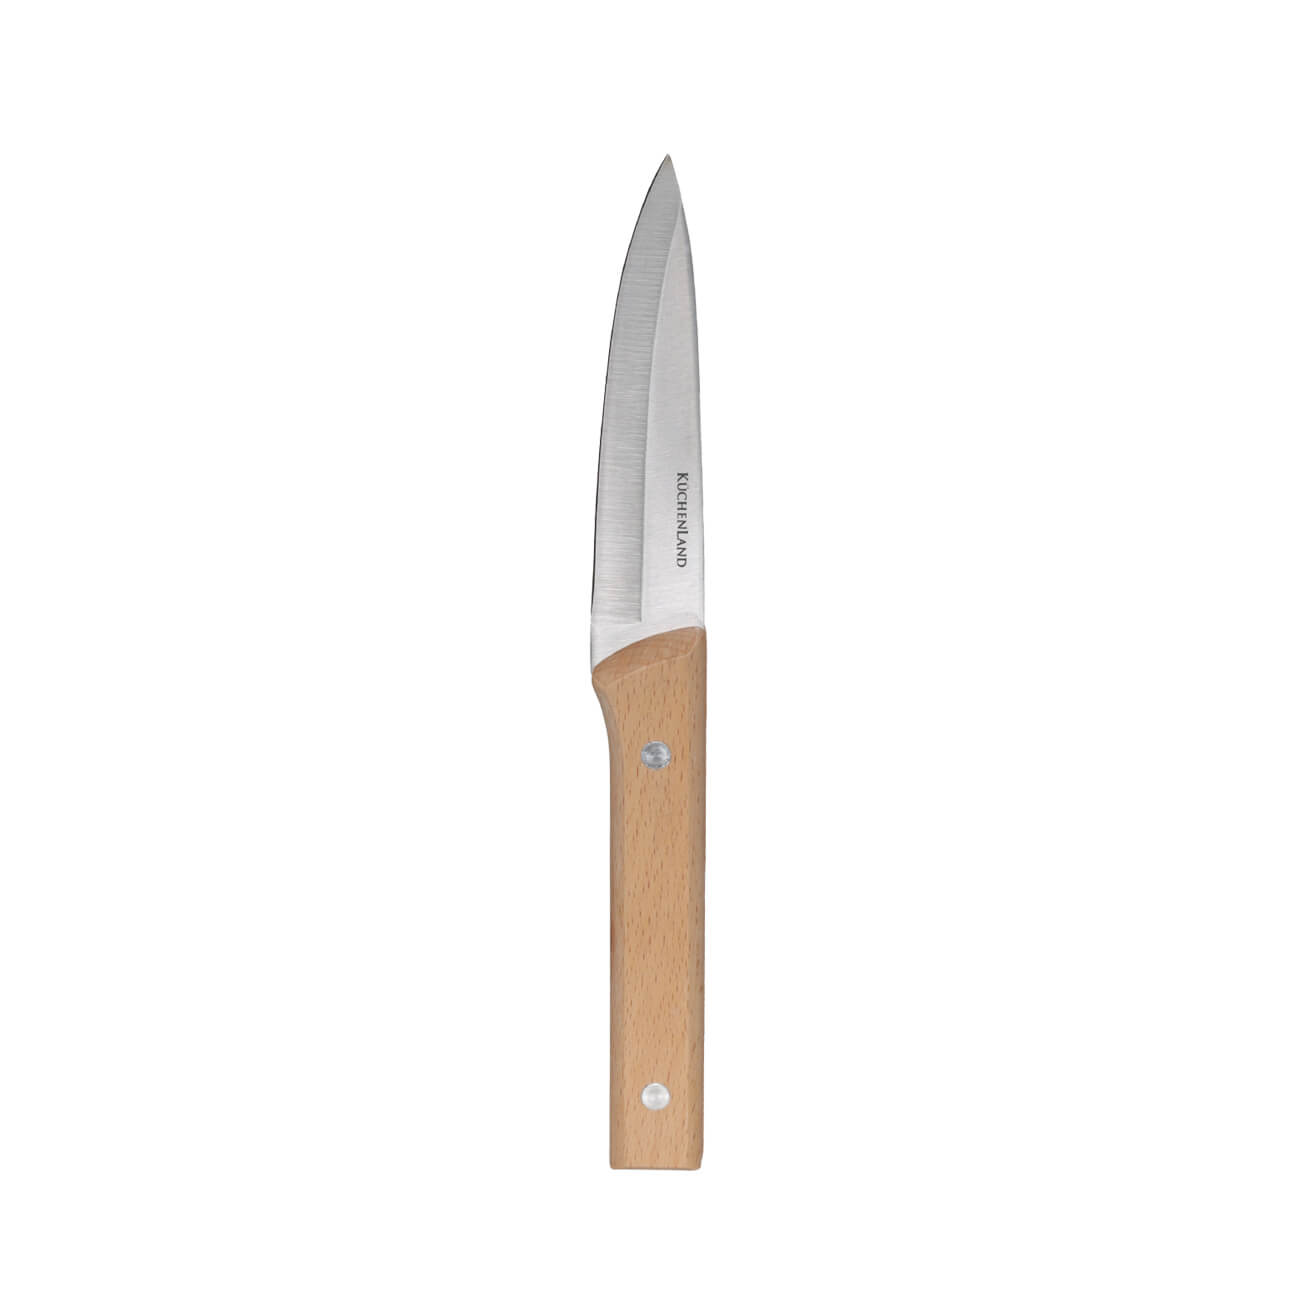 Нож для чистки овощей, 9 см, сталь/дерево, Eco home нож для чистки овощей tefal 9 см